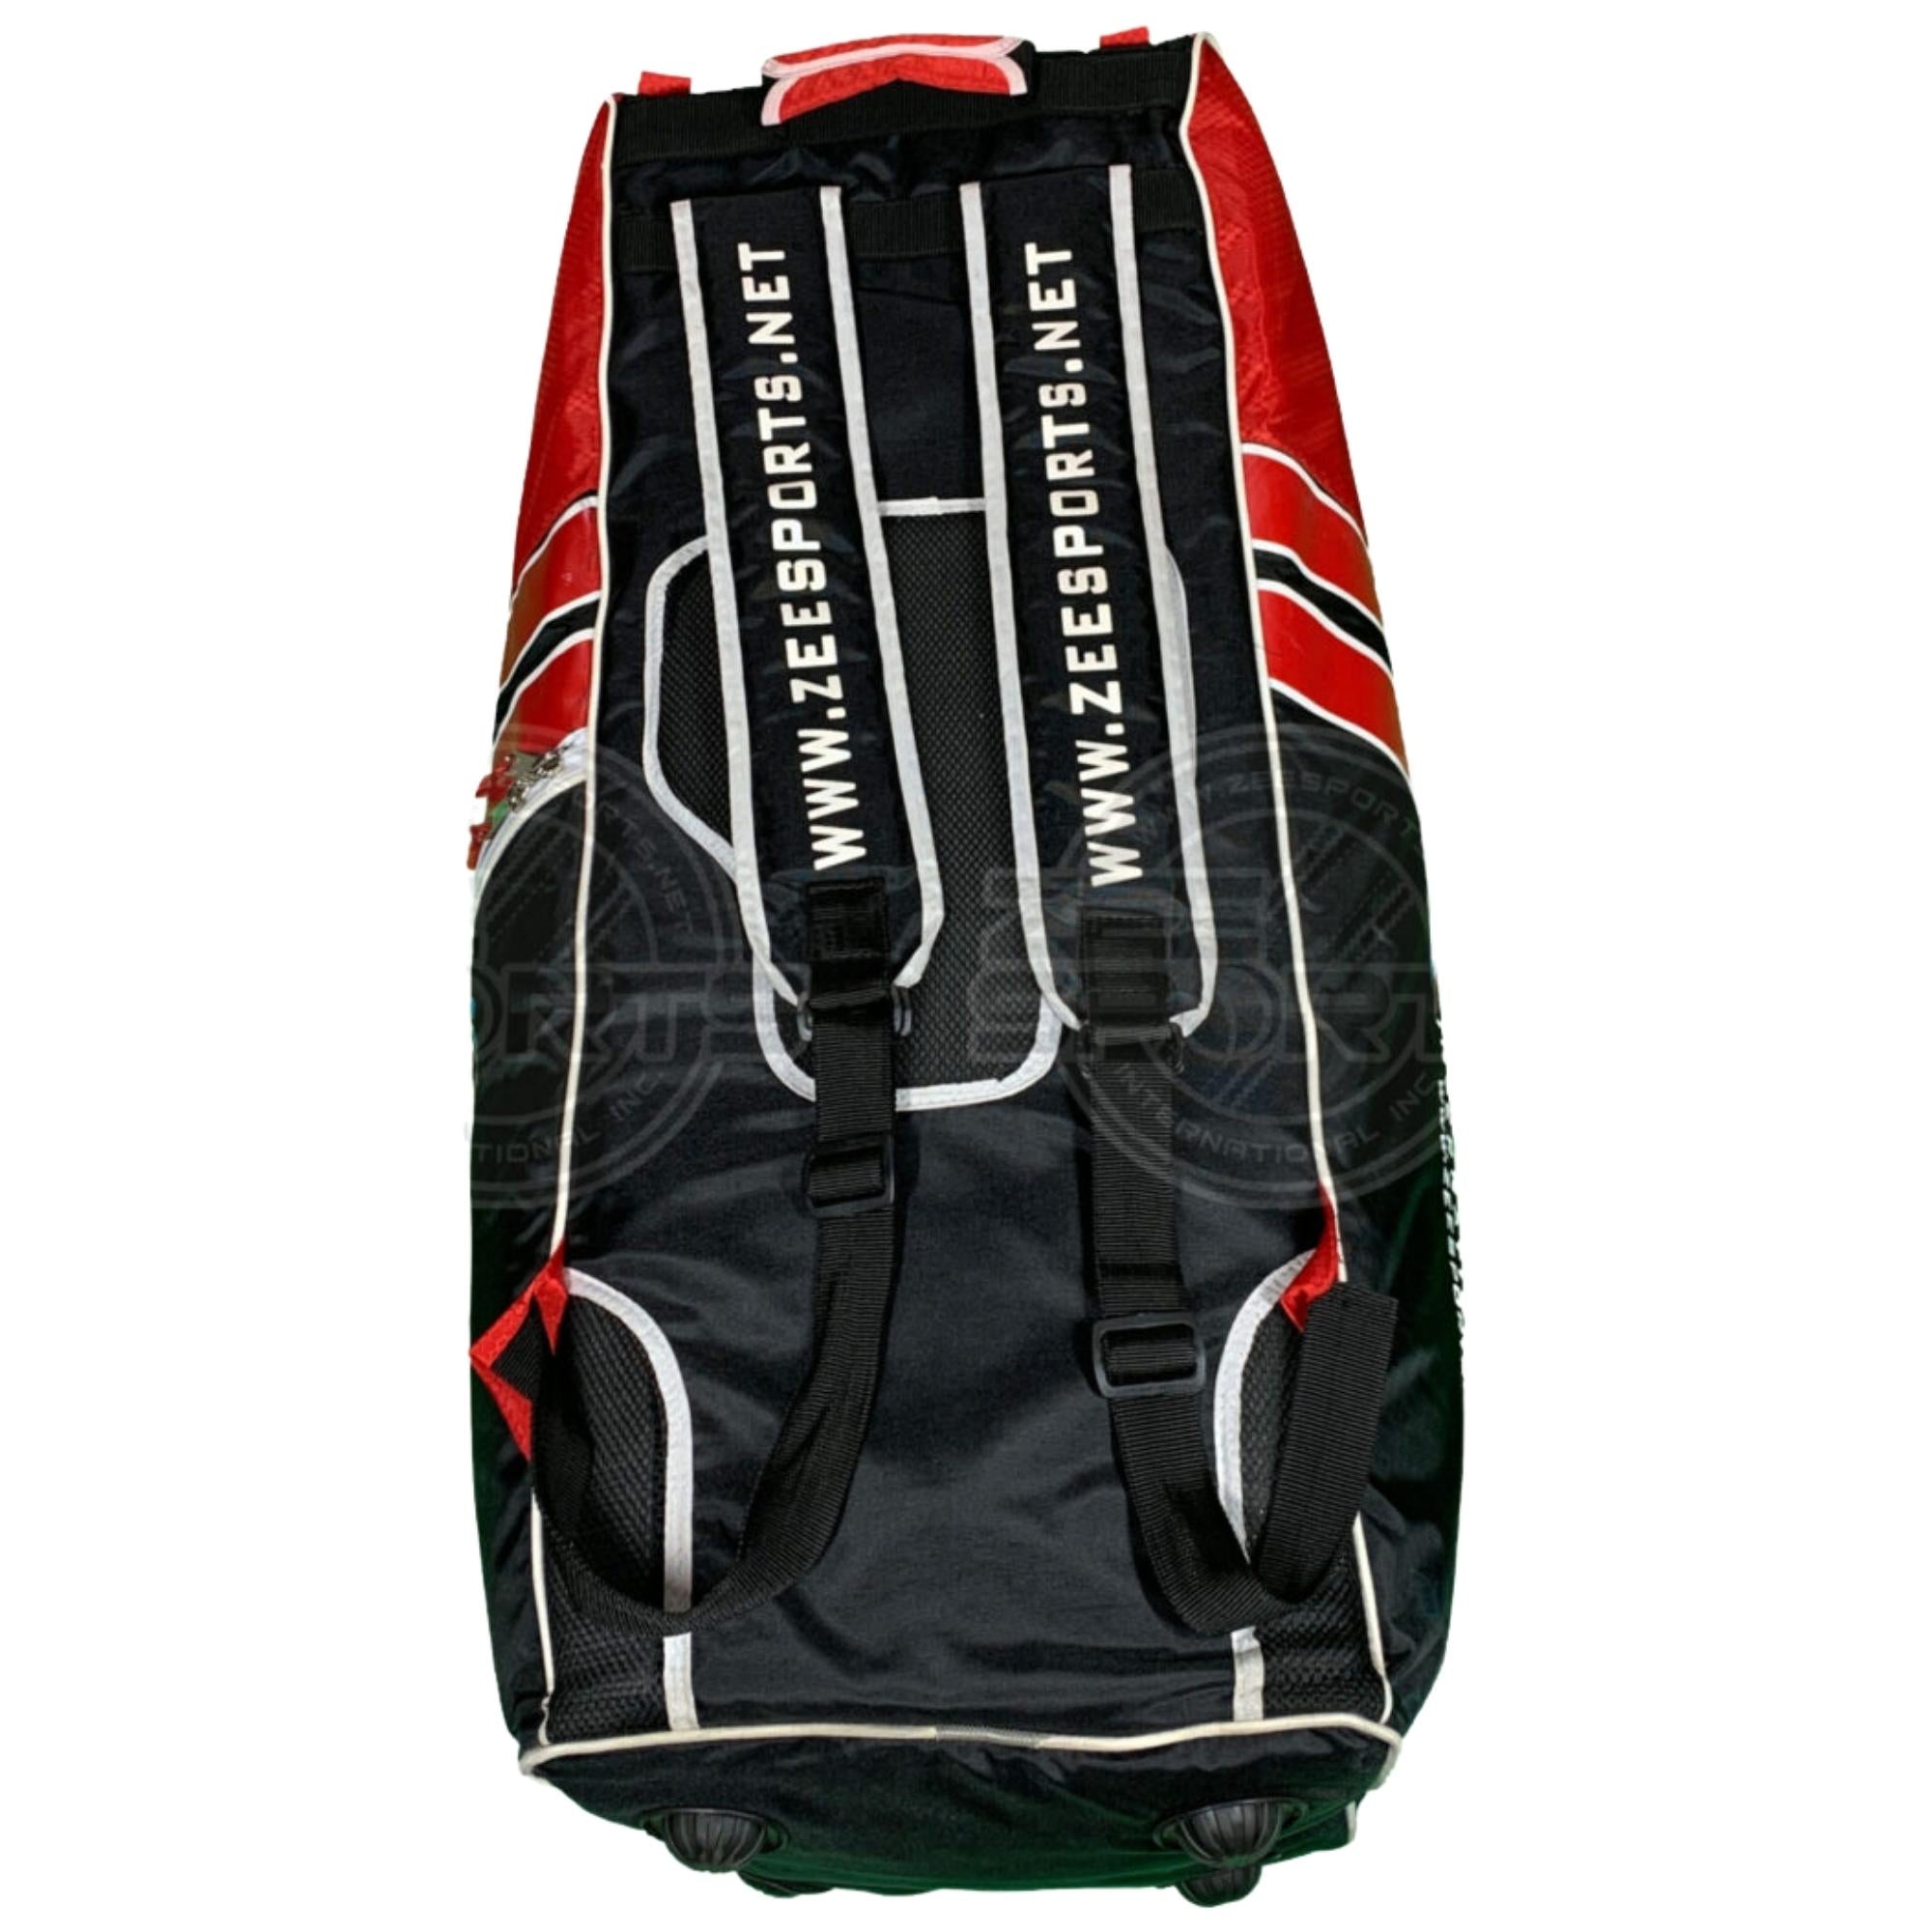 Zee Sports Cricket Bag Duffle BackPack Black Red